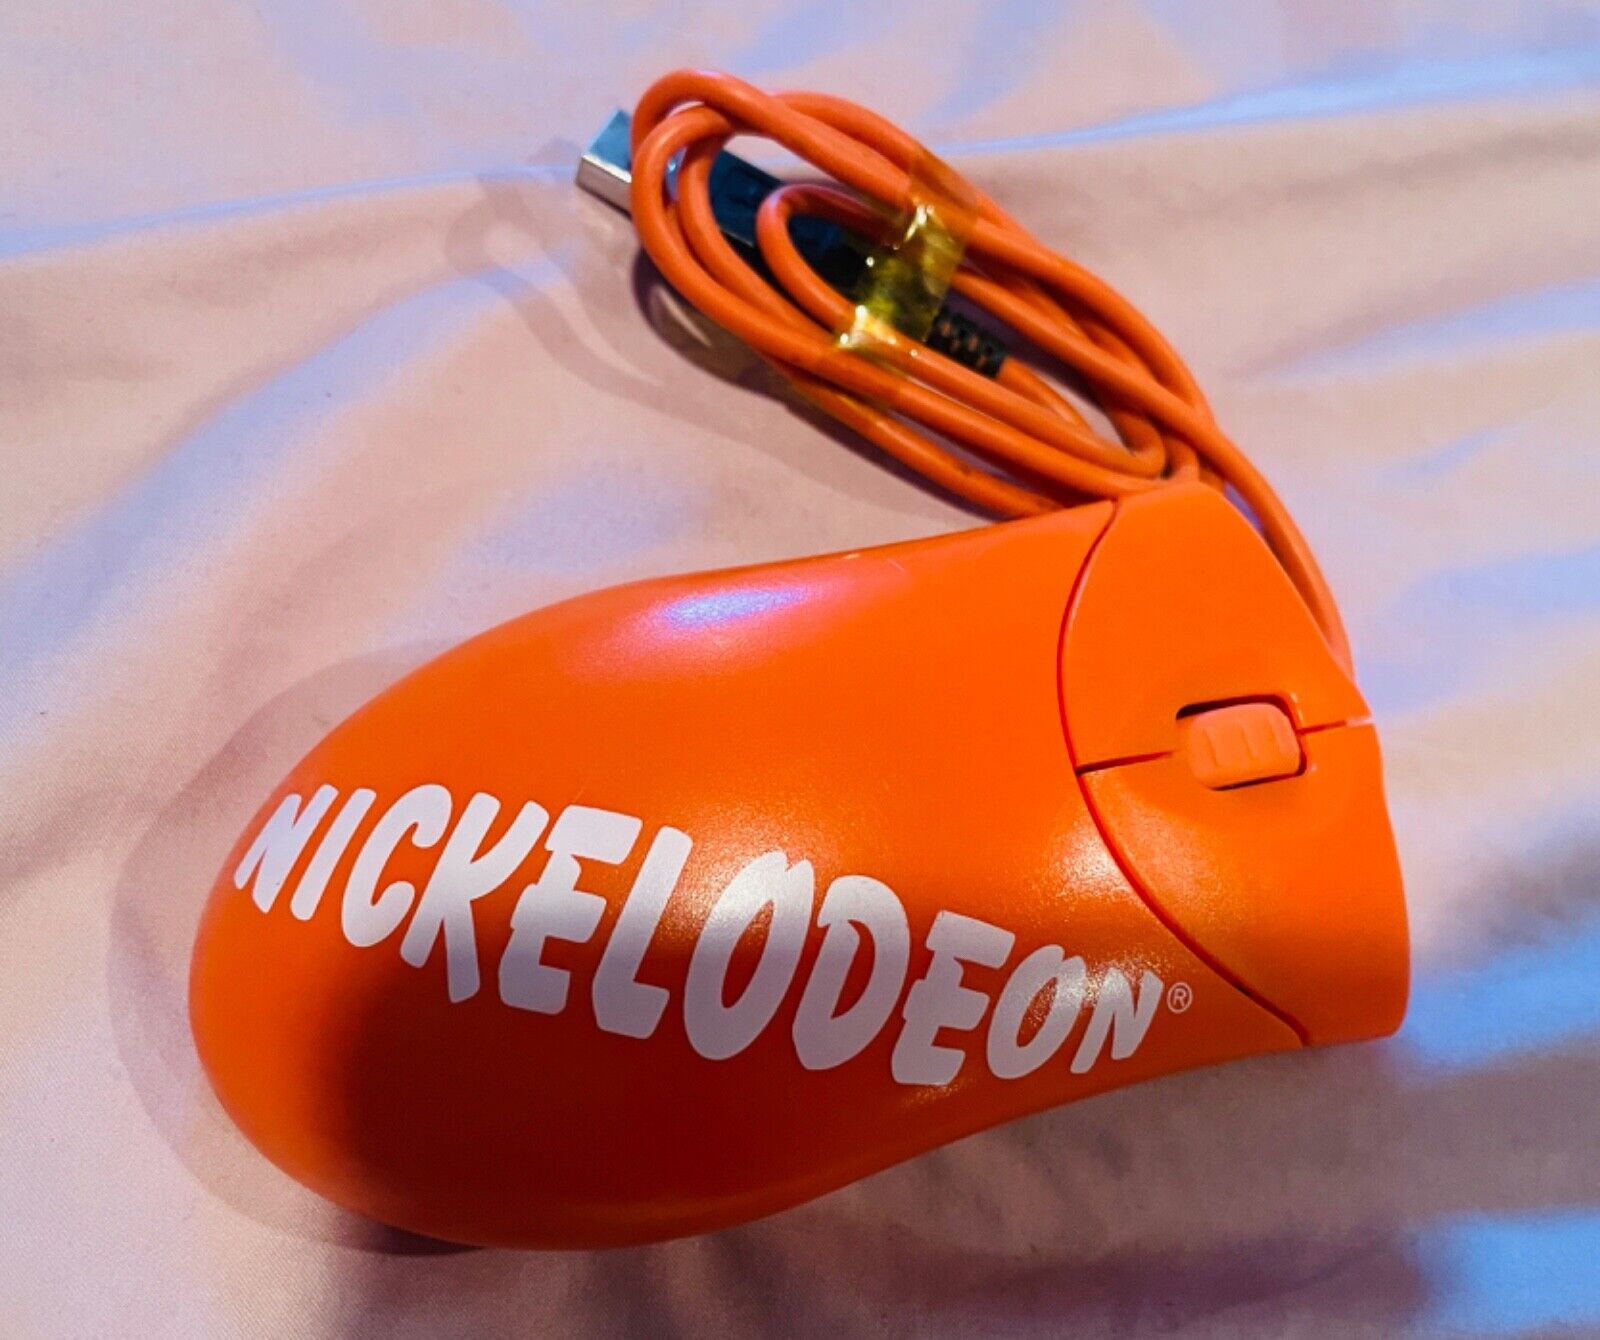 vintage nickelodeon computer mouse orange logo usb